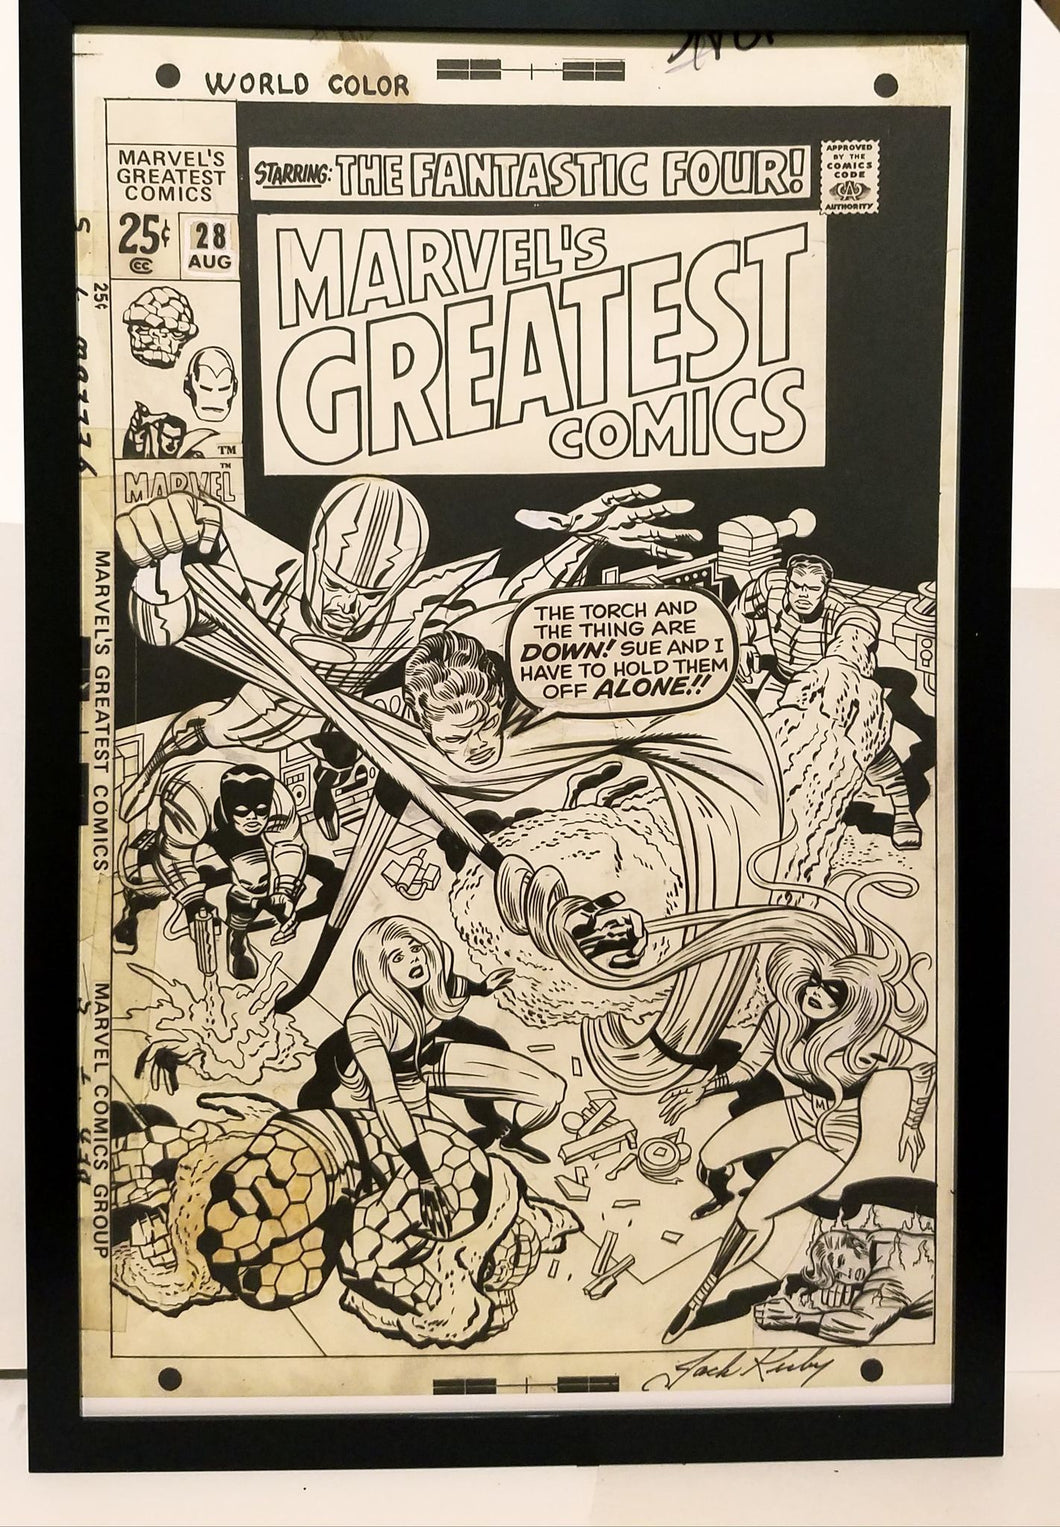 Marvel's Greatest Comics Fantastic Four #28 Jack Kirby 11x17 FRAMED Original Art Poster